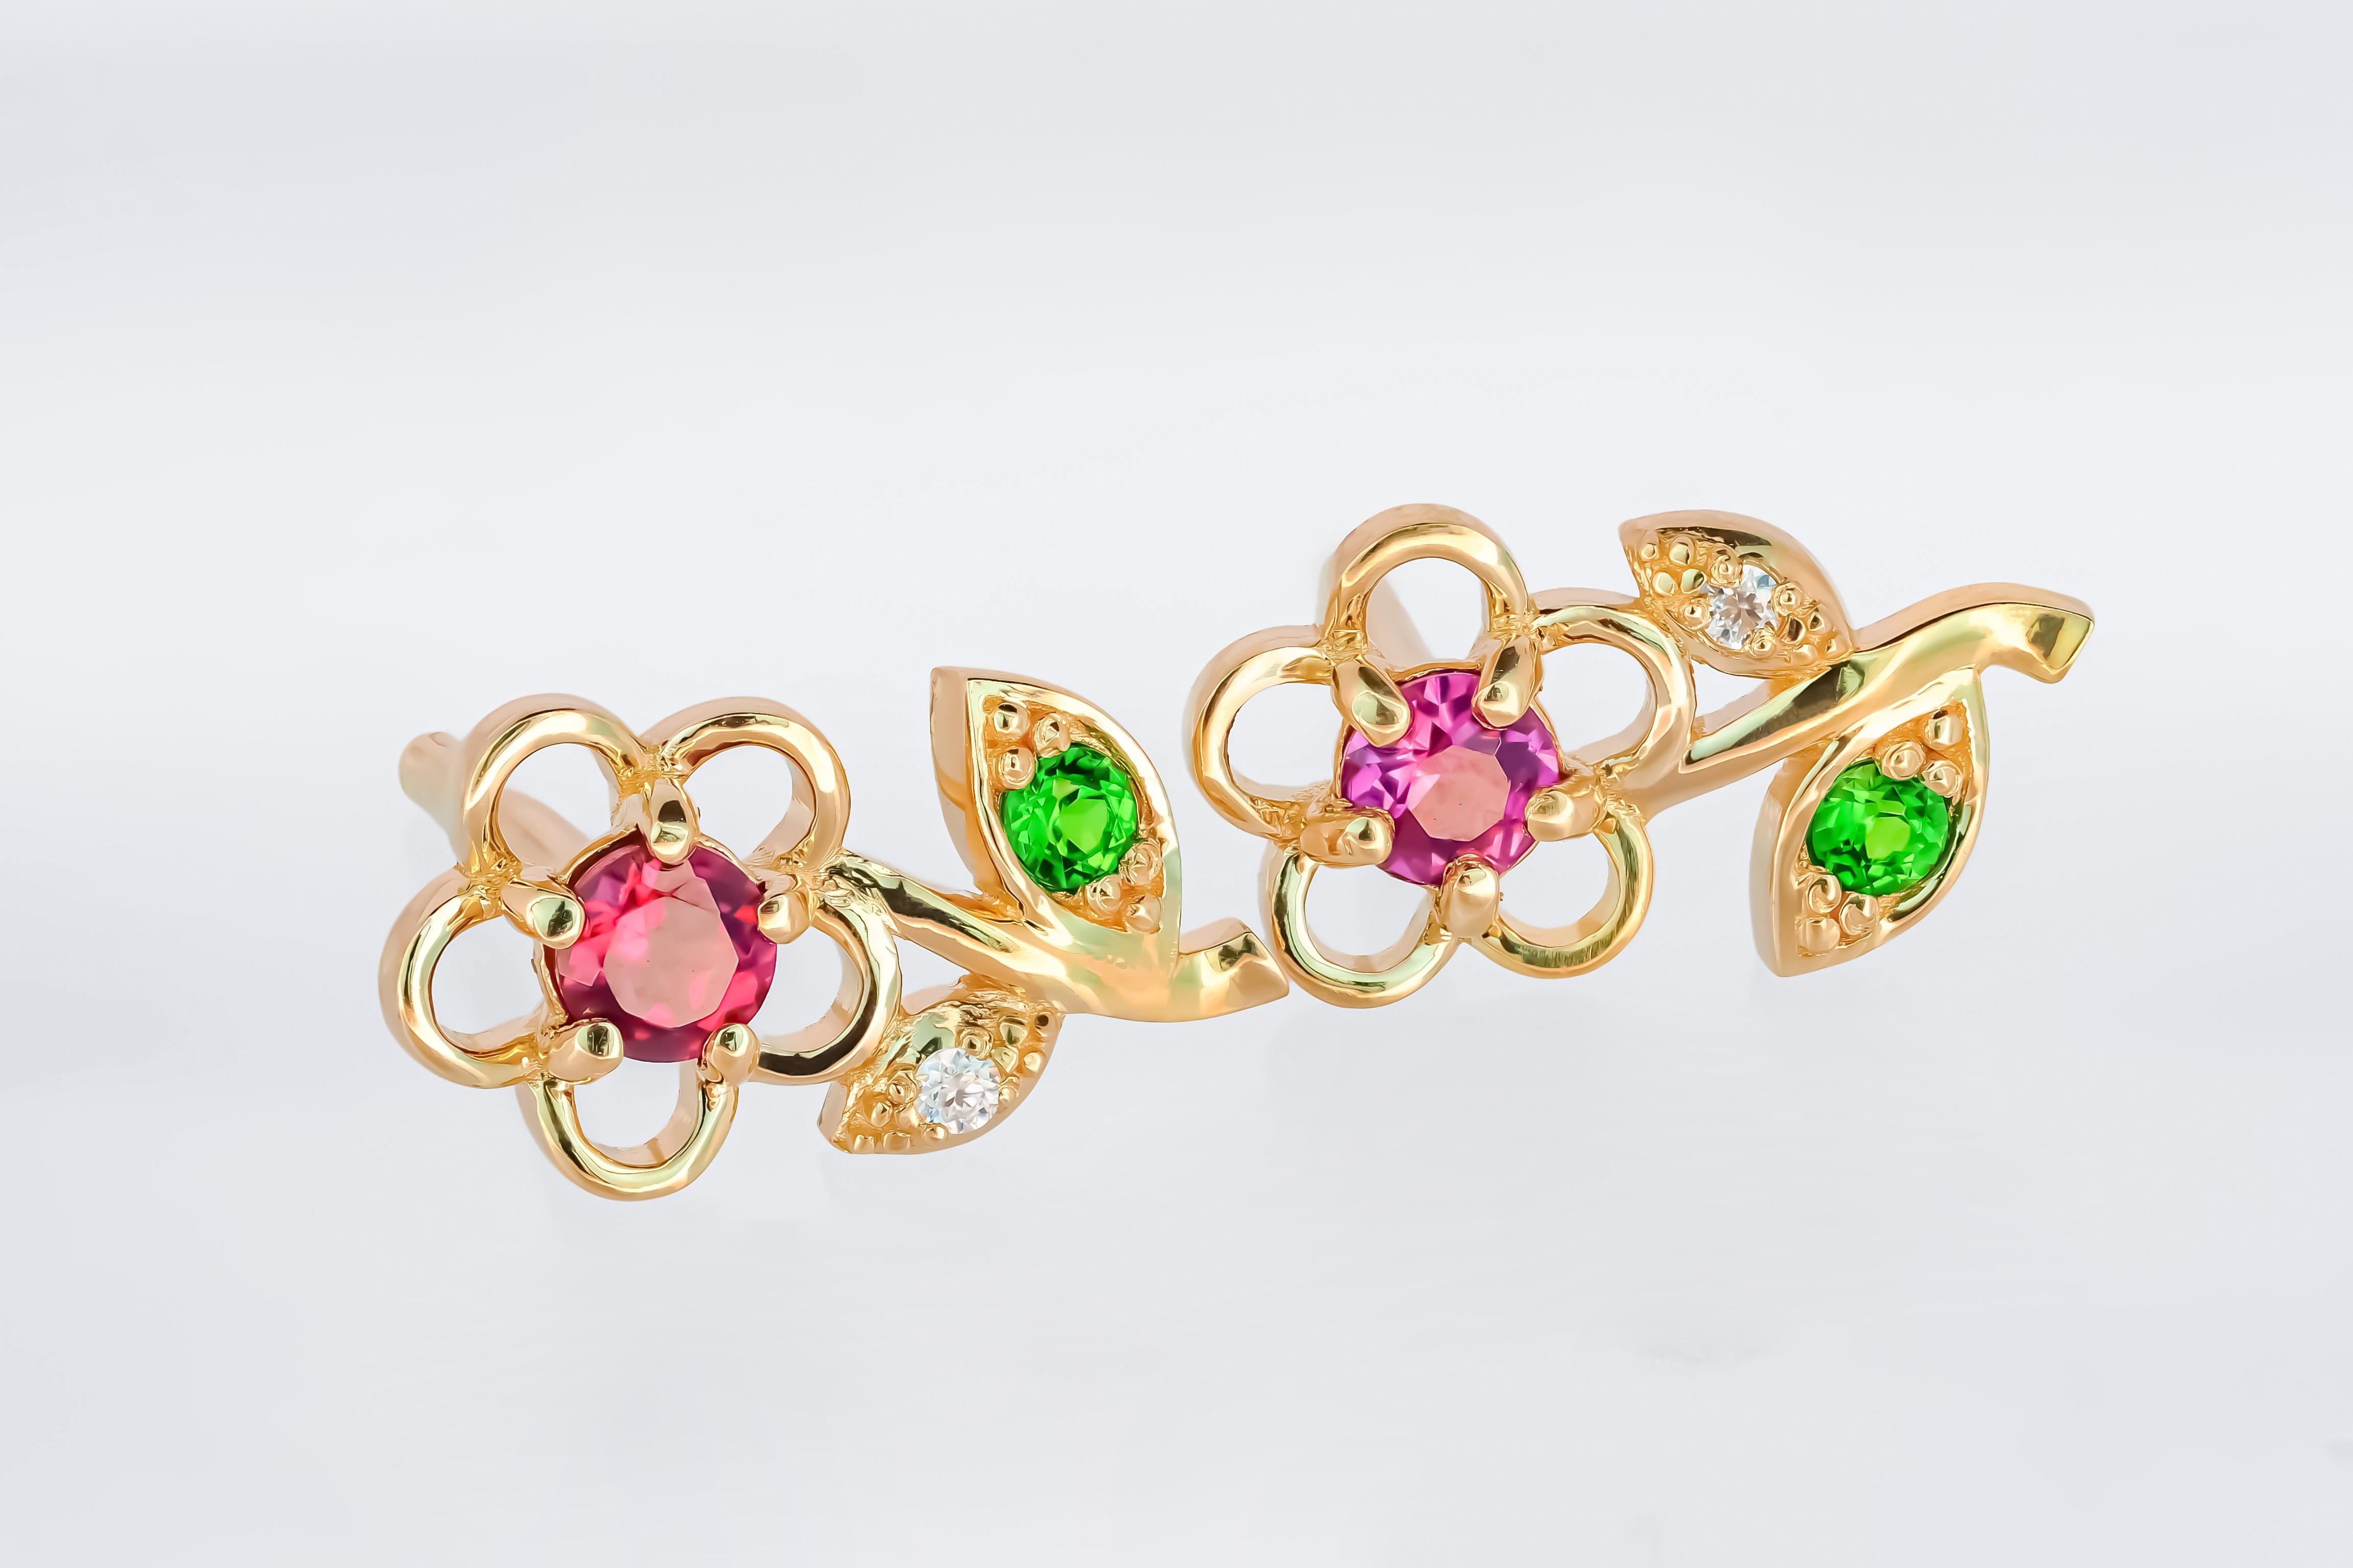 Modern 14k Gold Earrings Studs with Garnets, Tsavorites and Diamonds